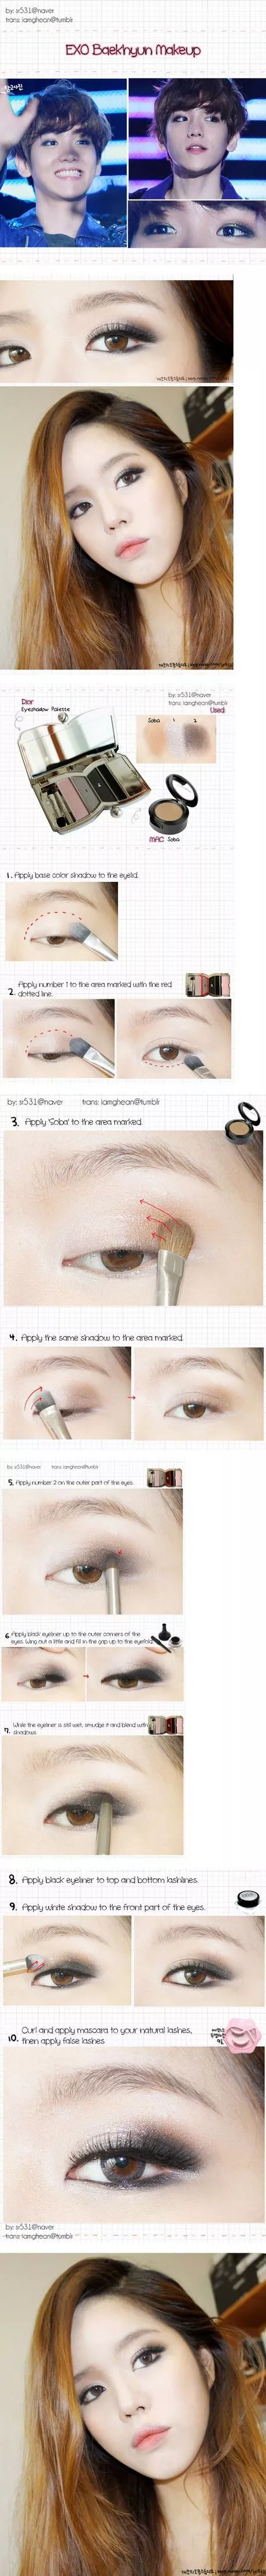 kpop-makeup-tutorial-exo-68_8-14 Kpop make-up tutorial exo